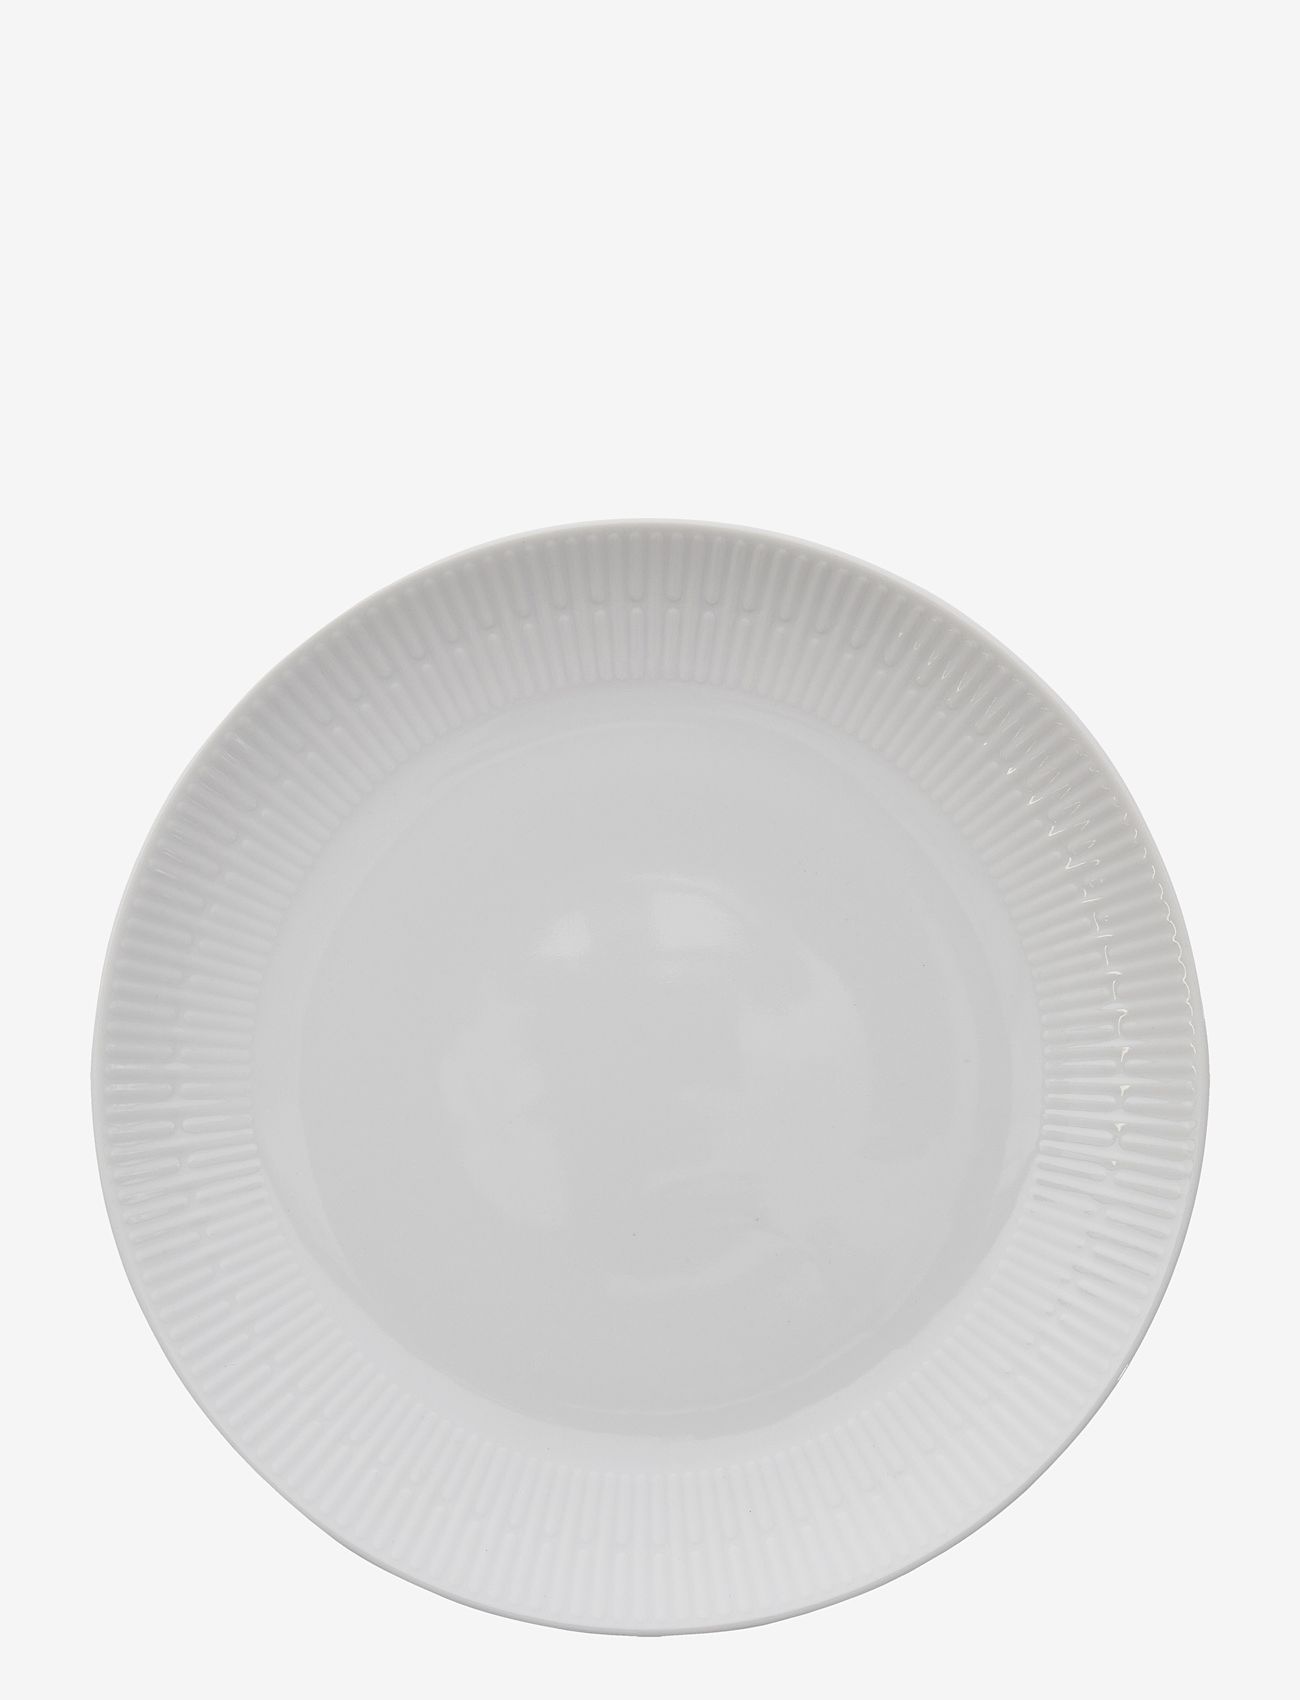 Aida - relief - white dinner plate - white - 1